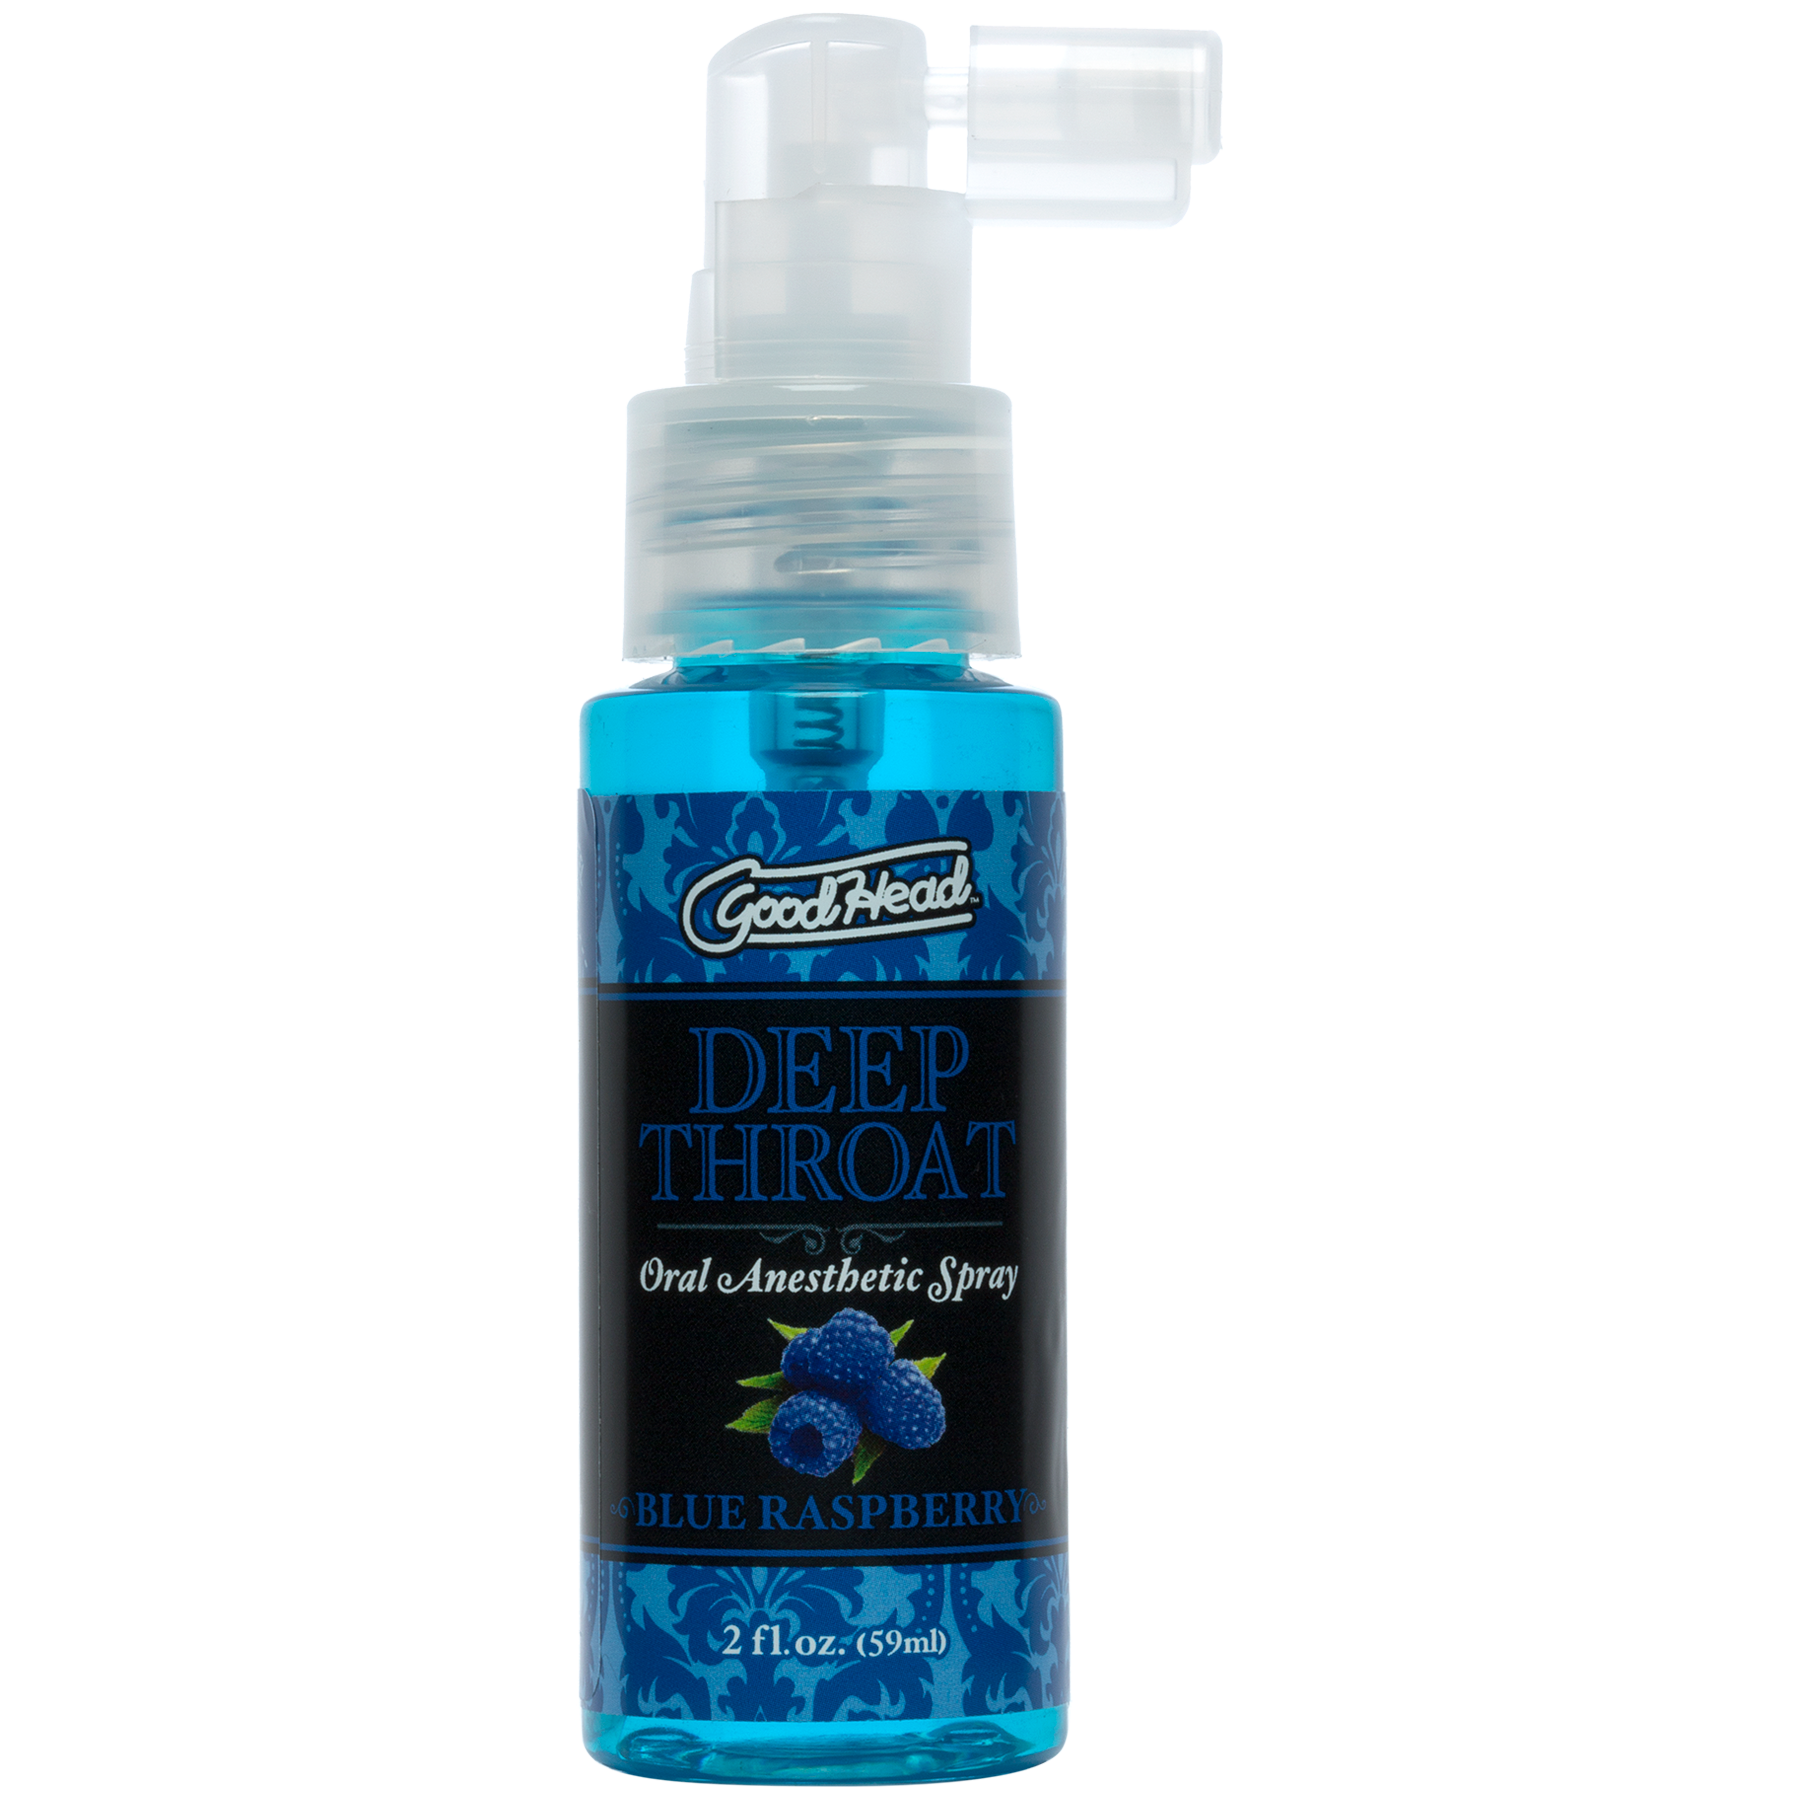 Deep Throat Oral Anesthetic Spray 2oz (blue raspberry).